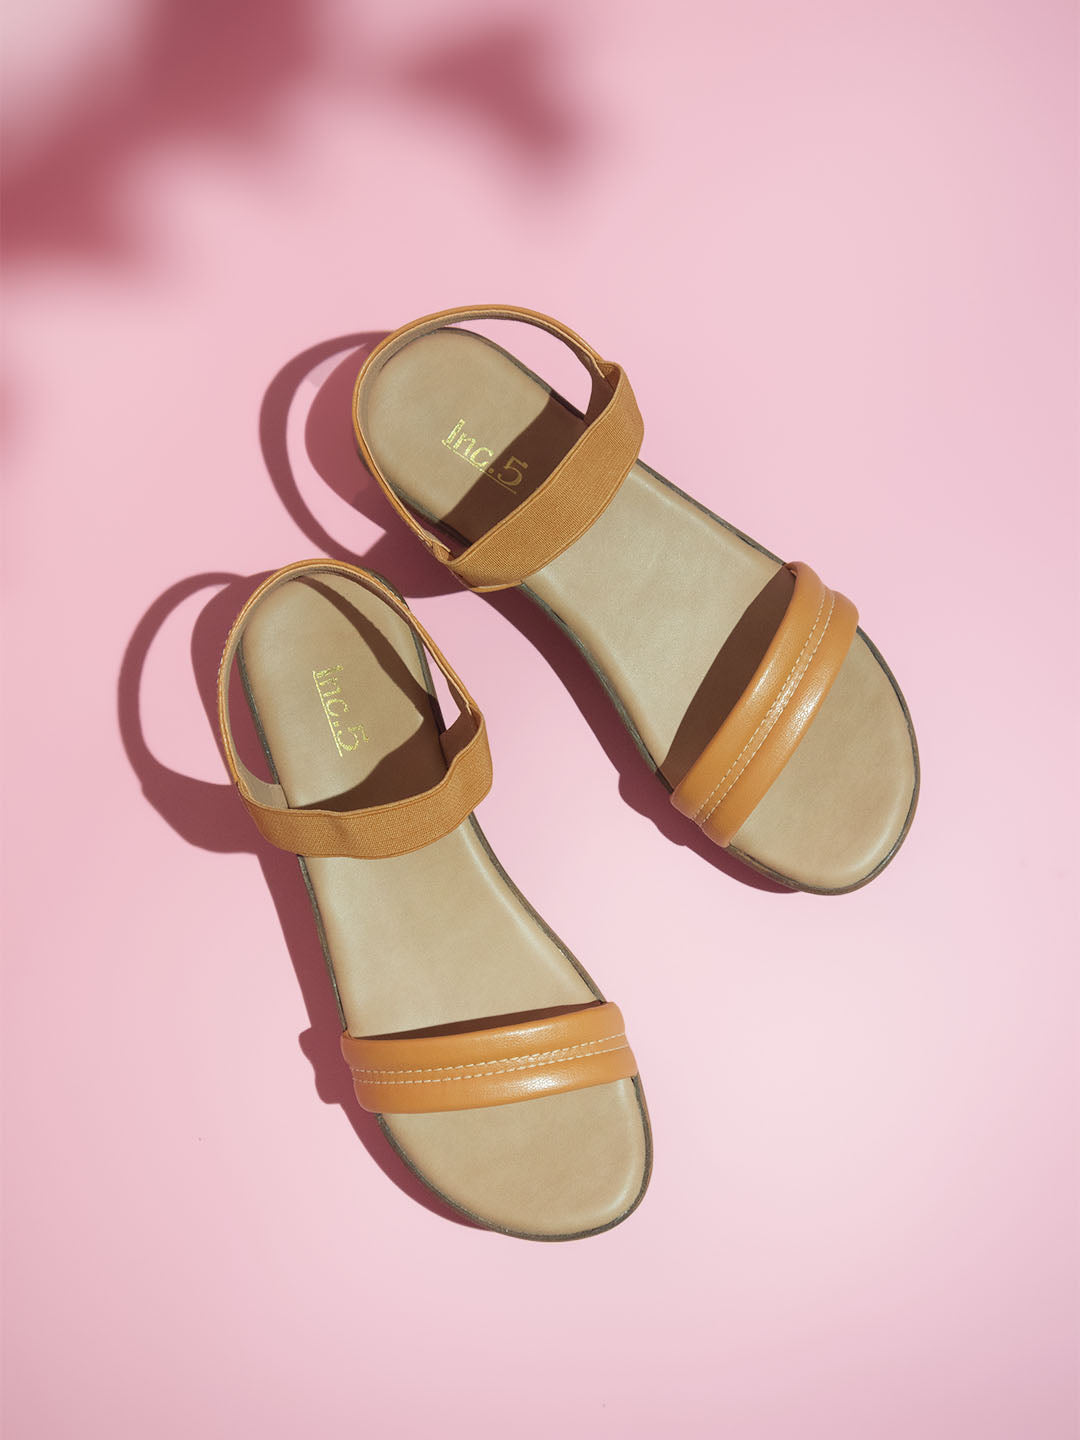 Buy Inc.5 Heel Fashion Sandal (Sultan) Online